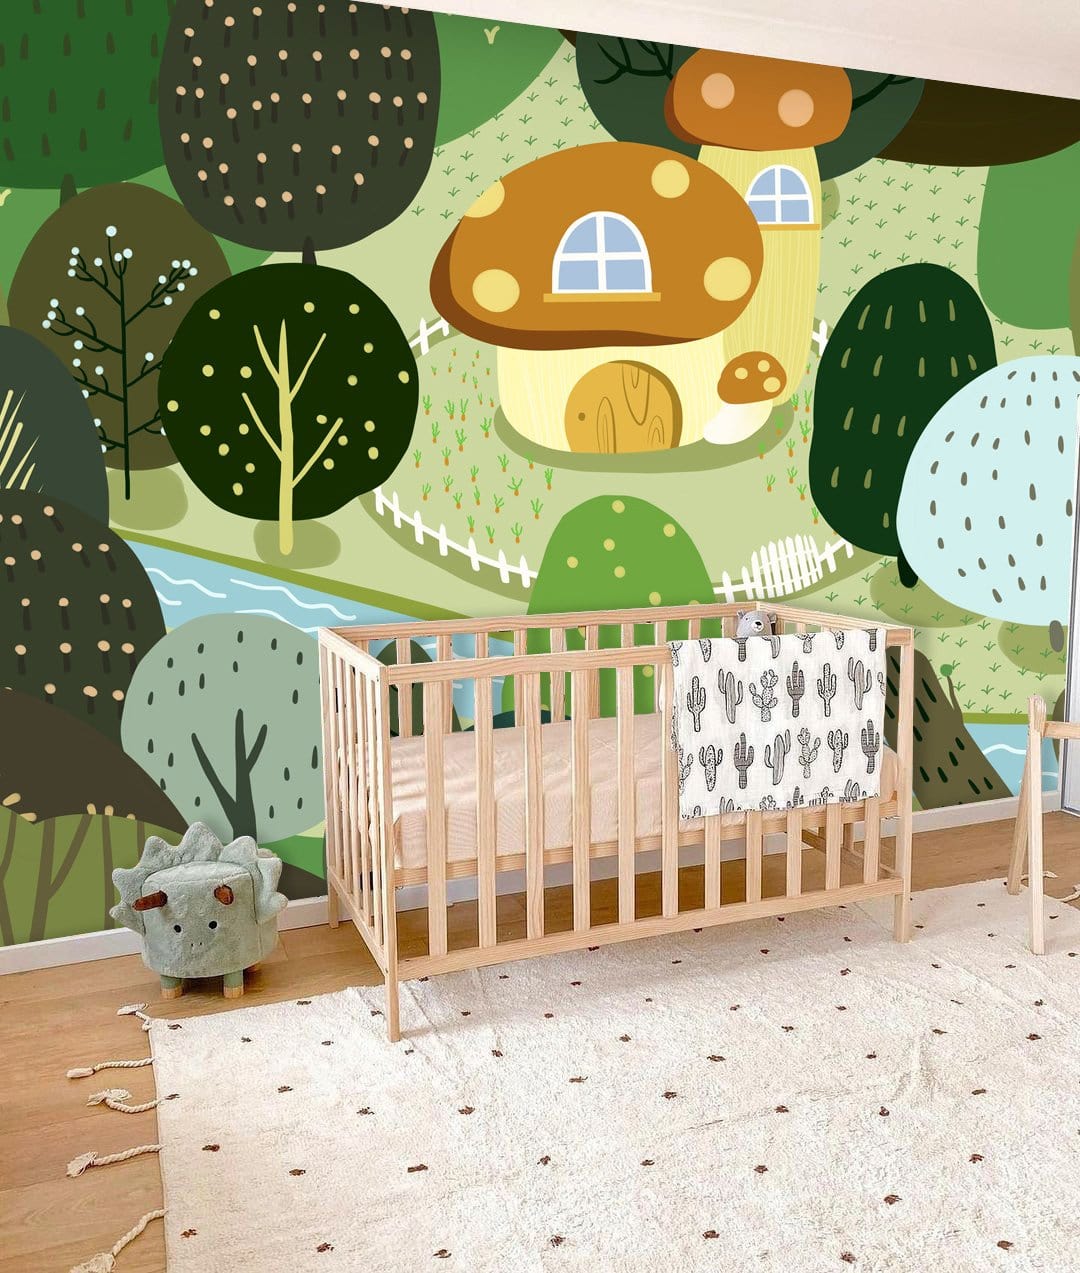 Children's Room Decoration Featuring a Cartoon Forest Scene Wallpaper Mural